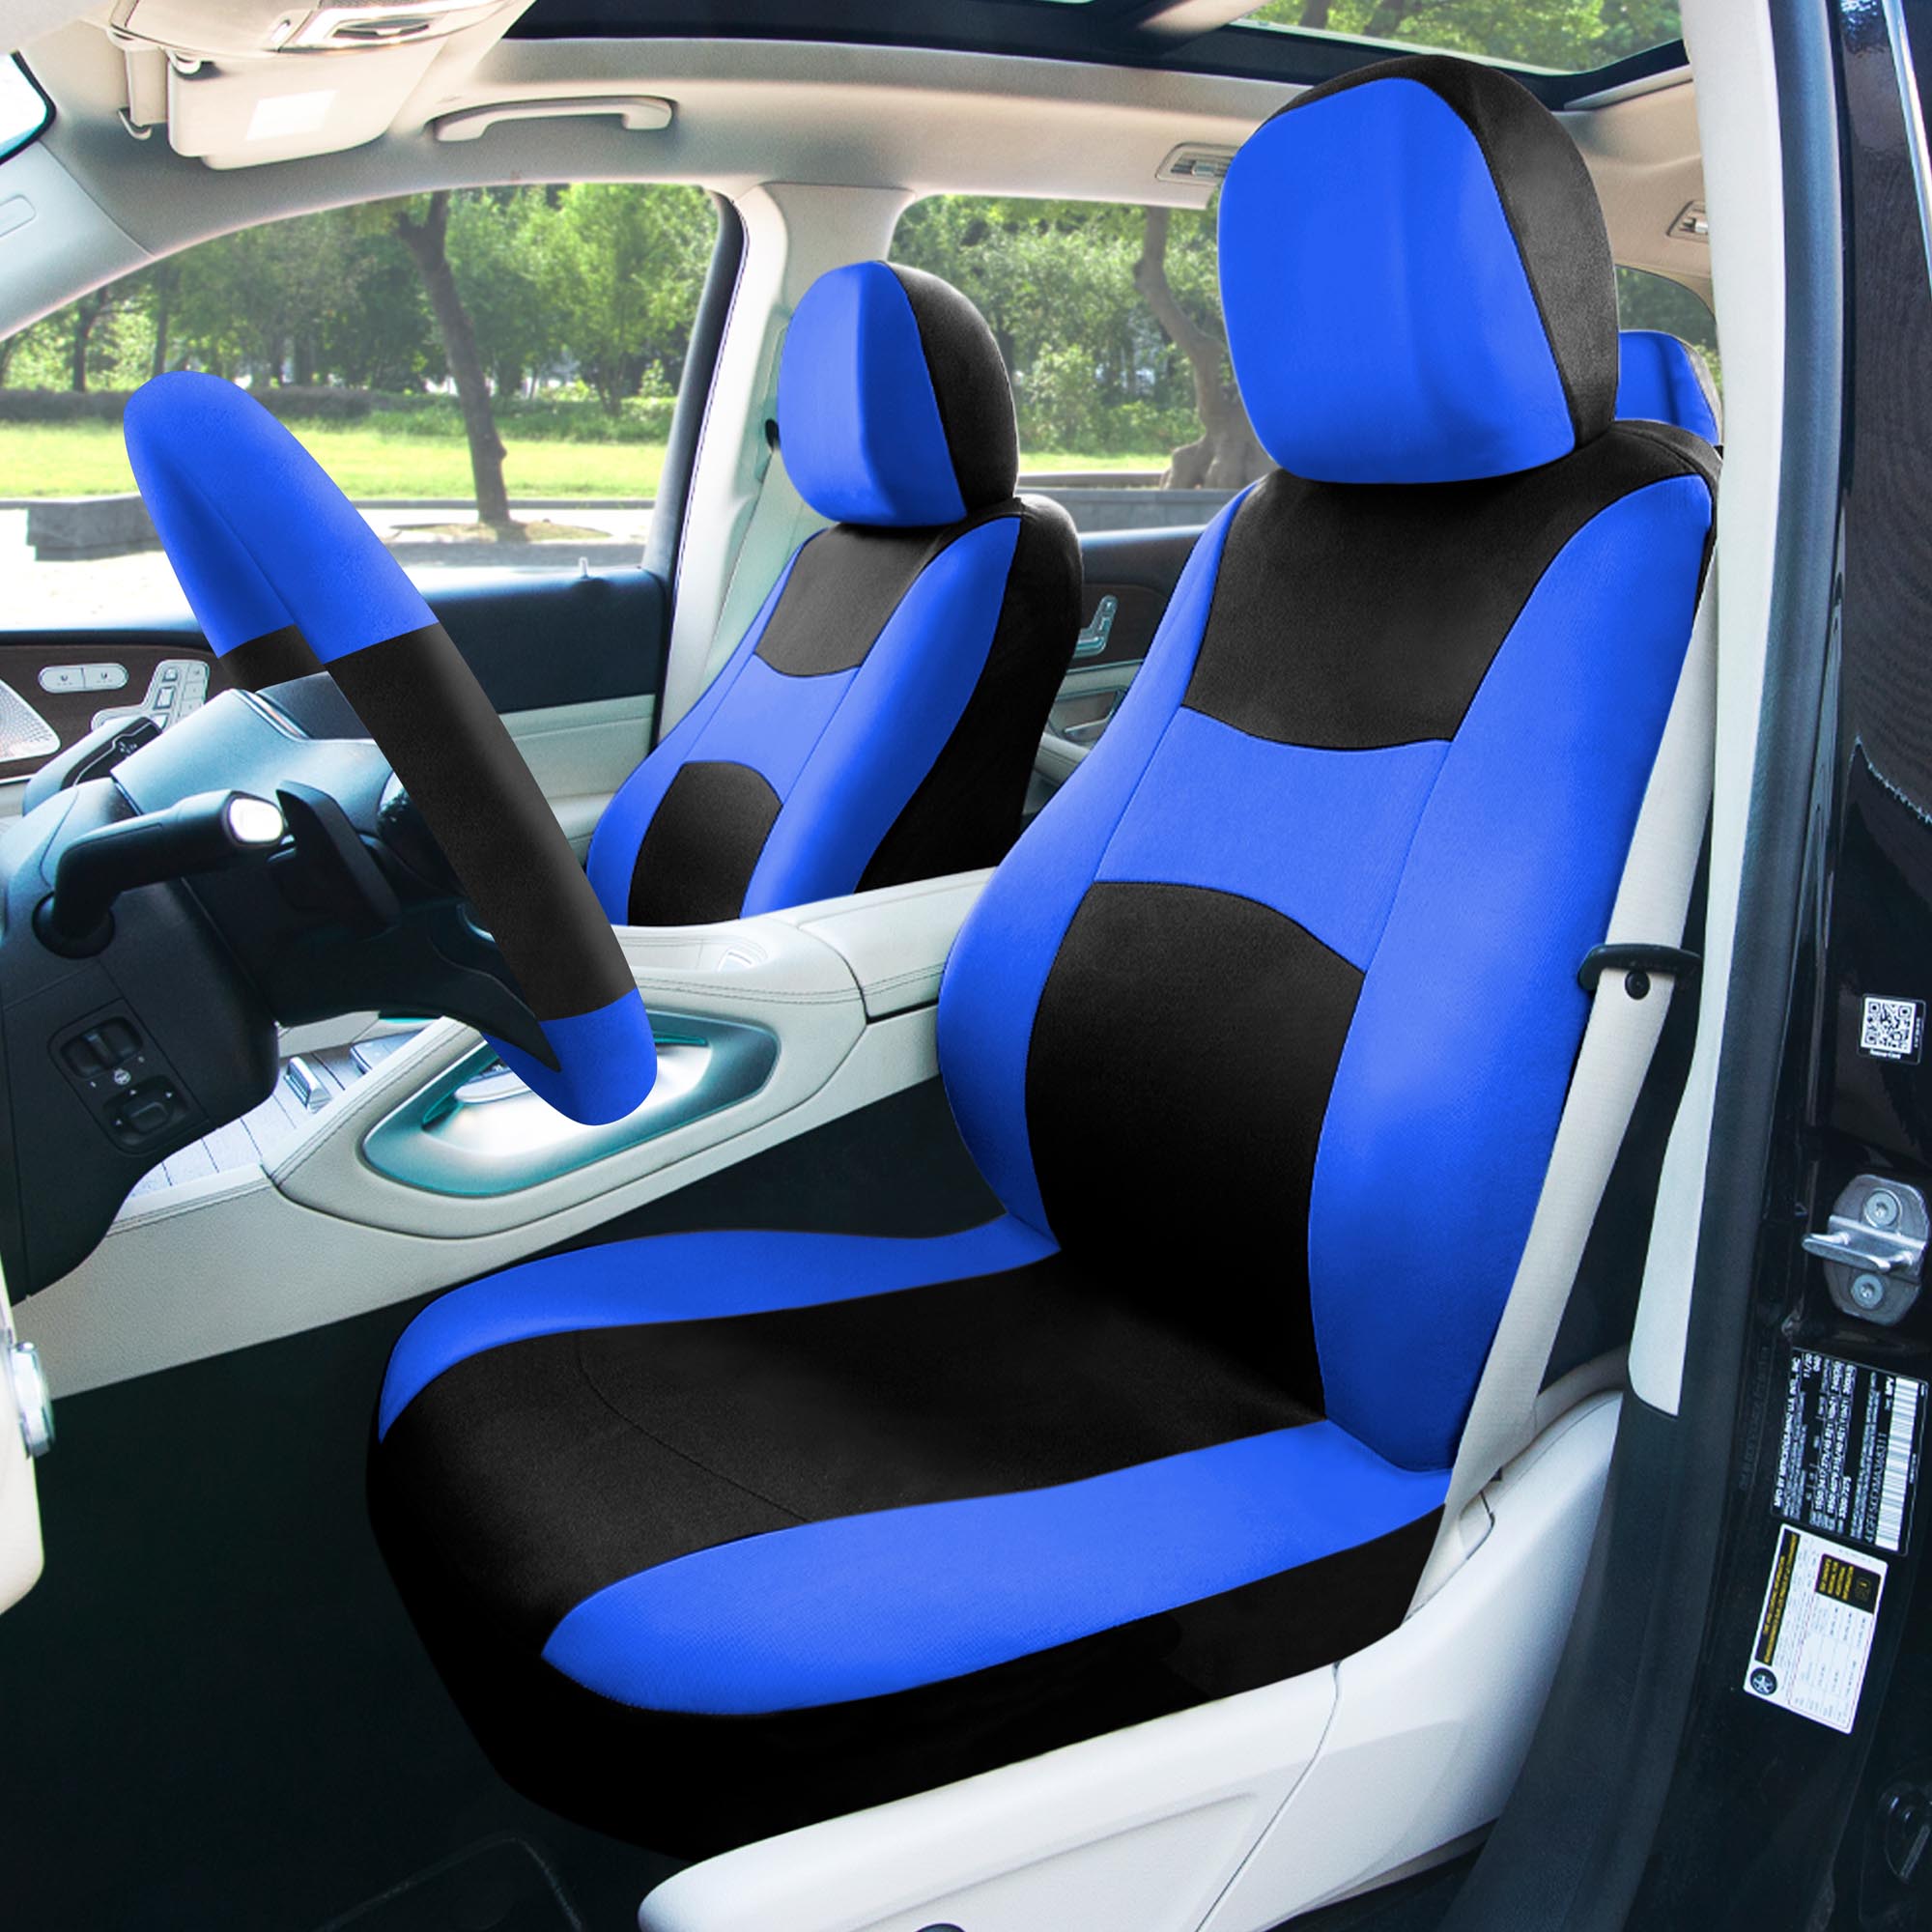 Light & Breezy Flat Cloth Seat Covers - Combo Set Blue / Black